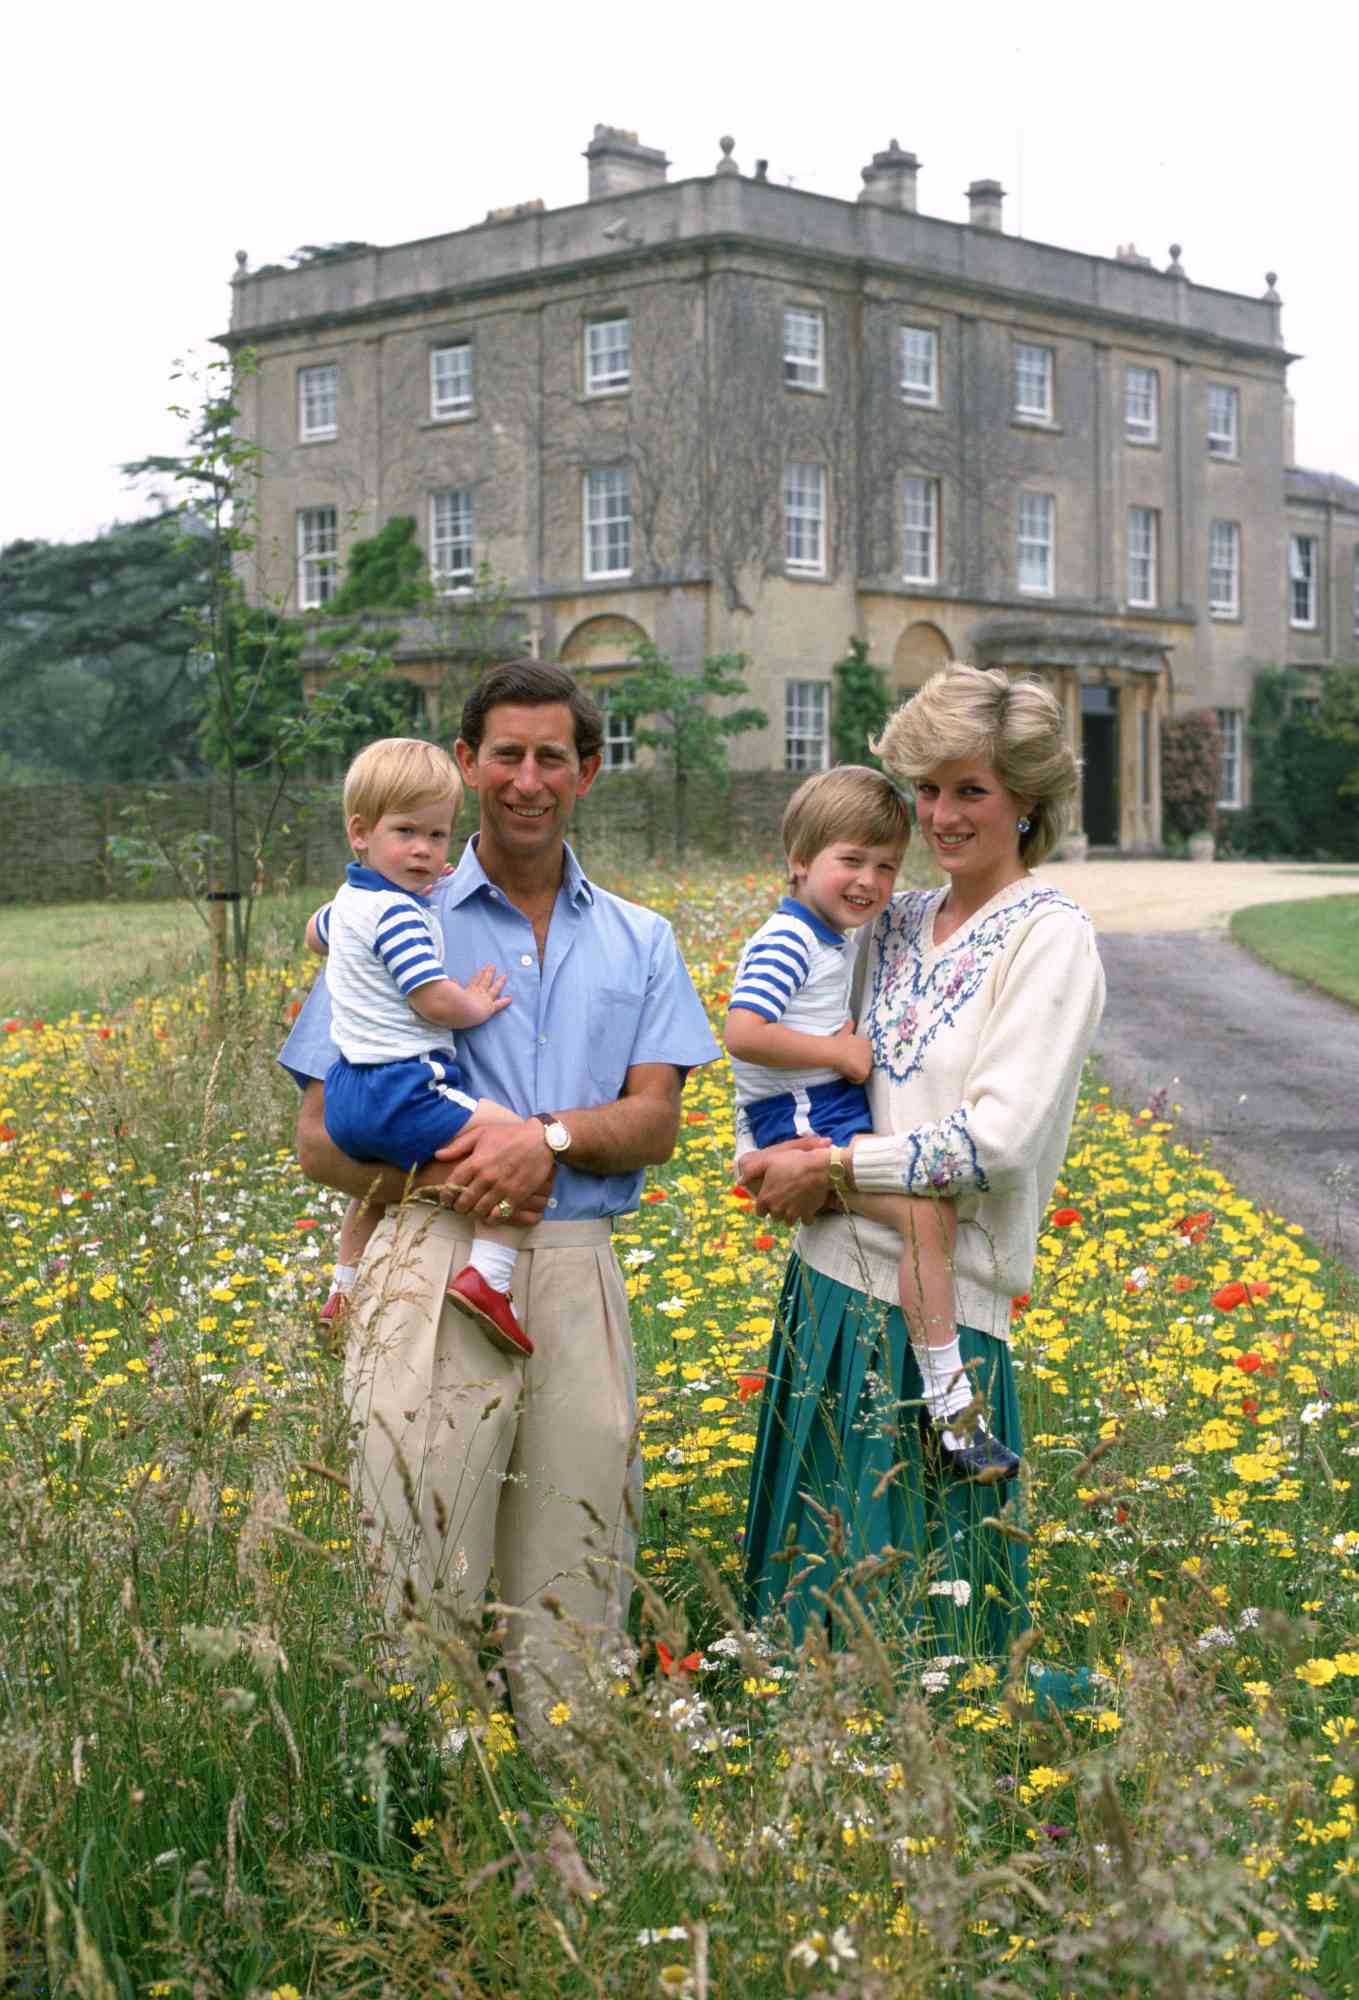 Prince William and Prince Harry Childhood Photos | PEOPLE.com